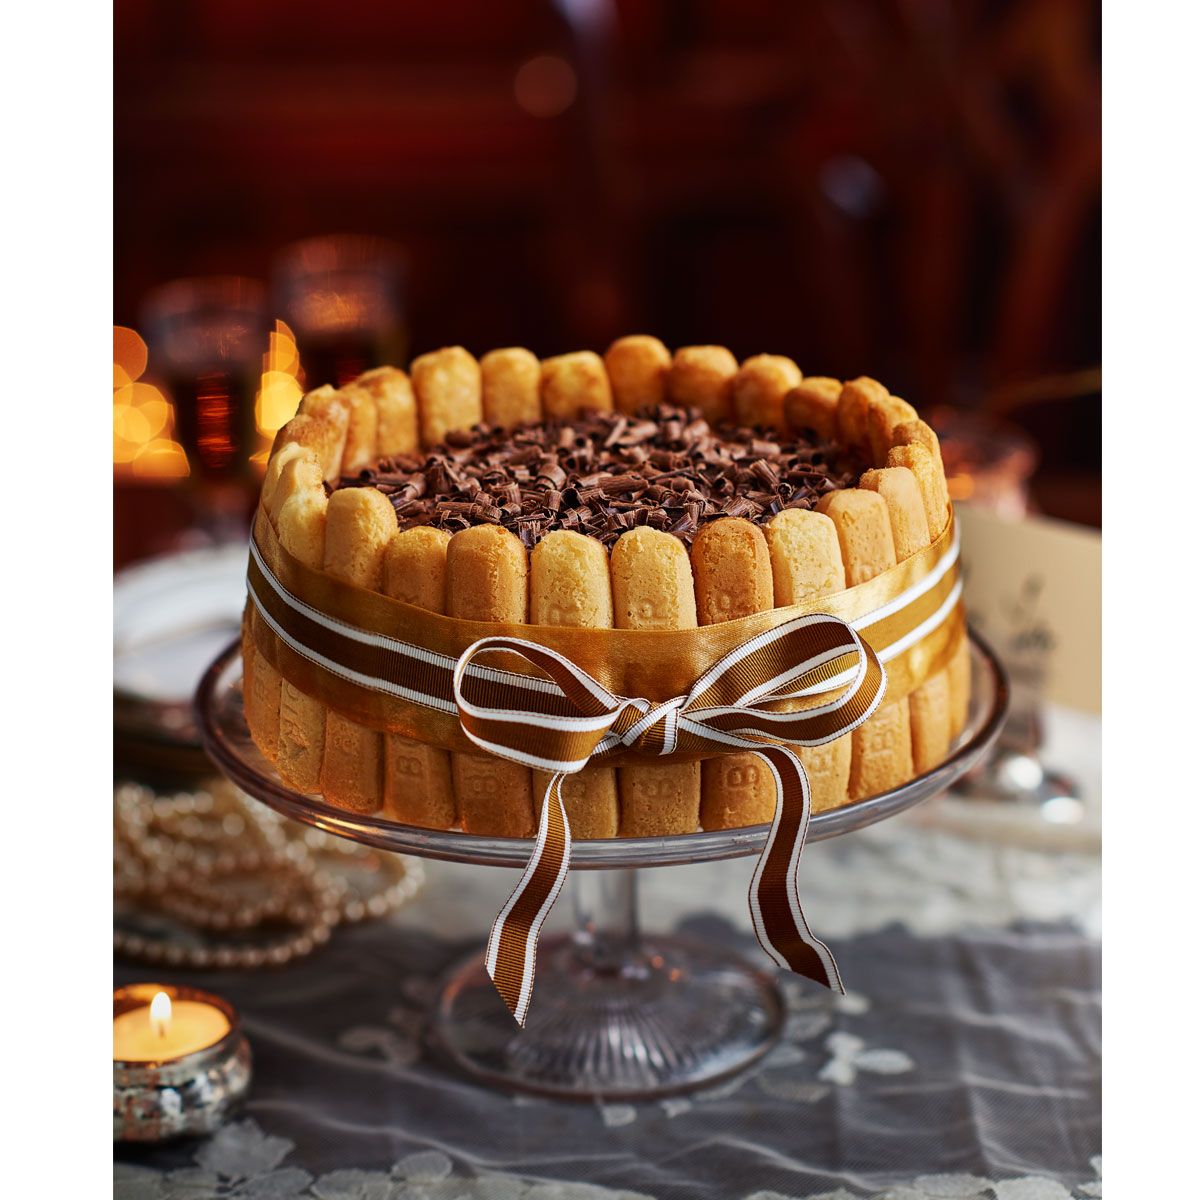 Chocolate Charlotte russe - chocolate dessert recipe